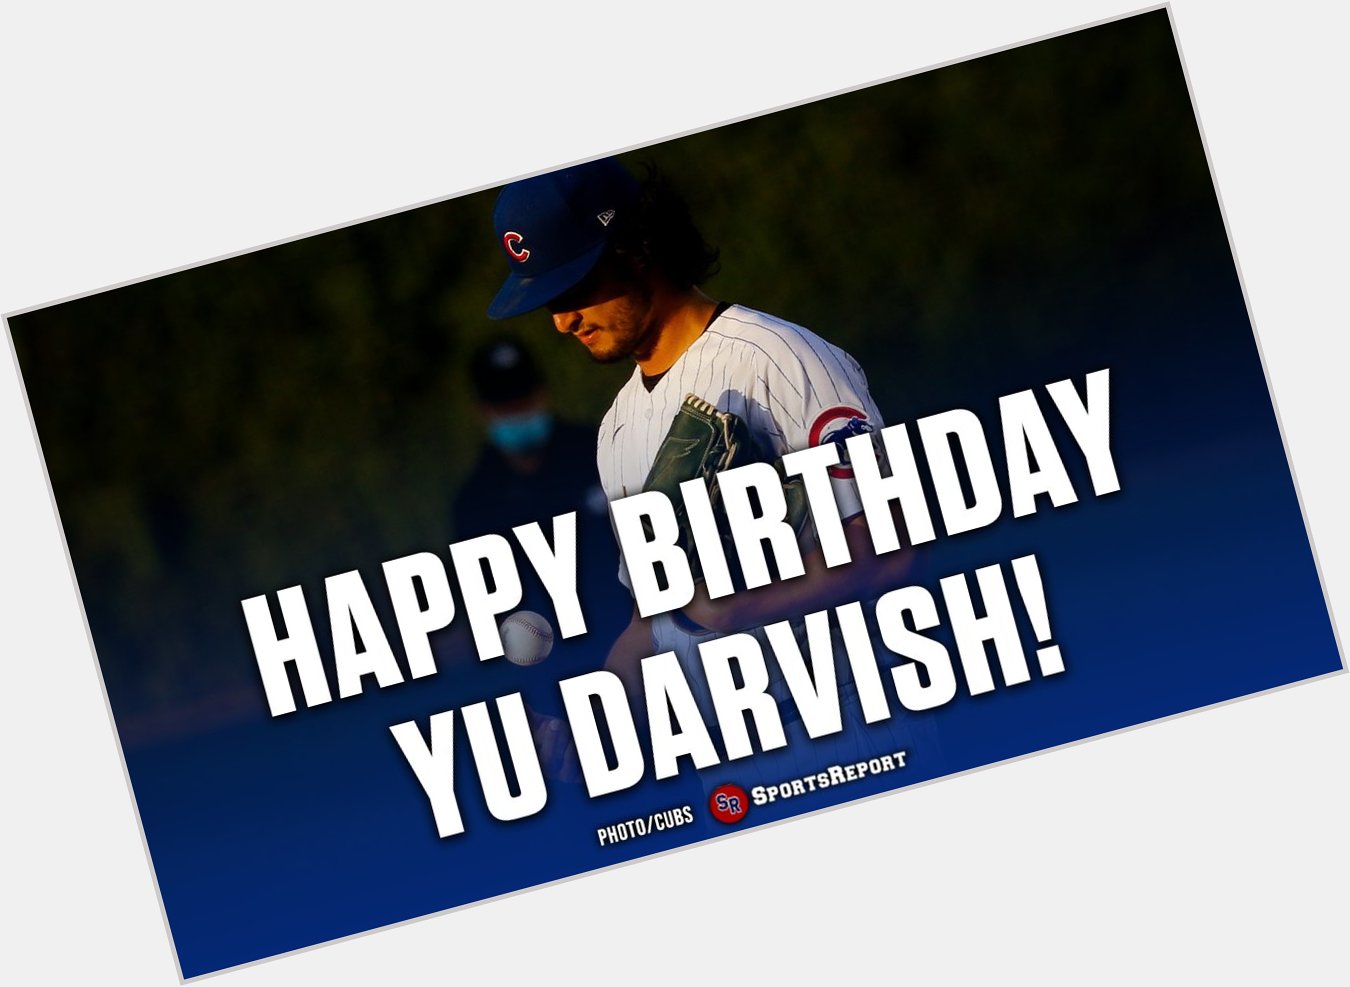  Fans, let\s wish Yu Darvish a Happy Birthday! GO CUBS!! 